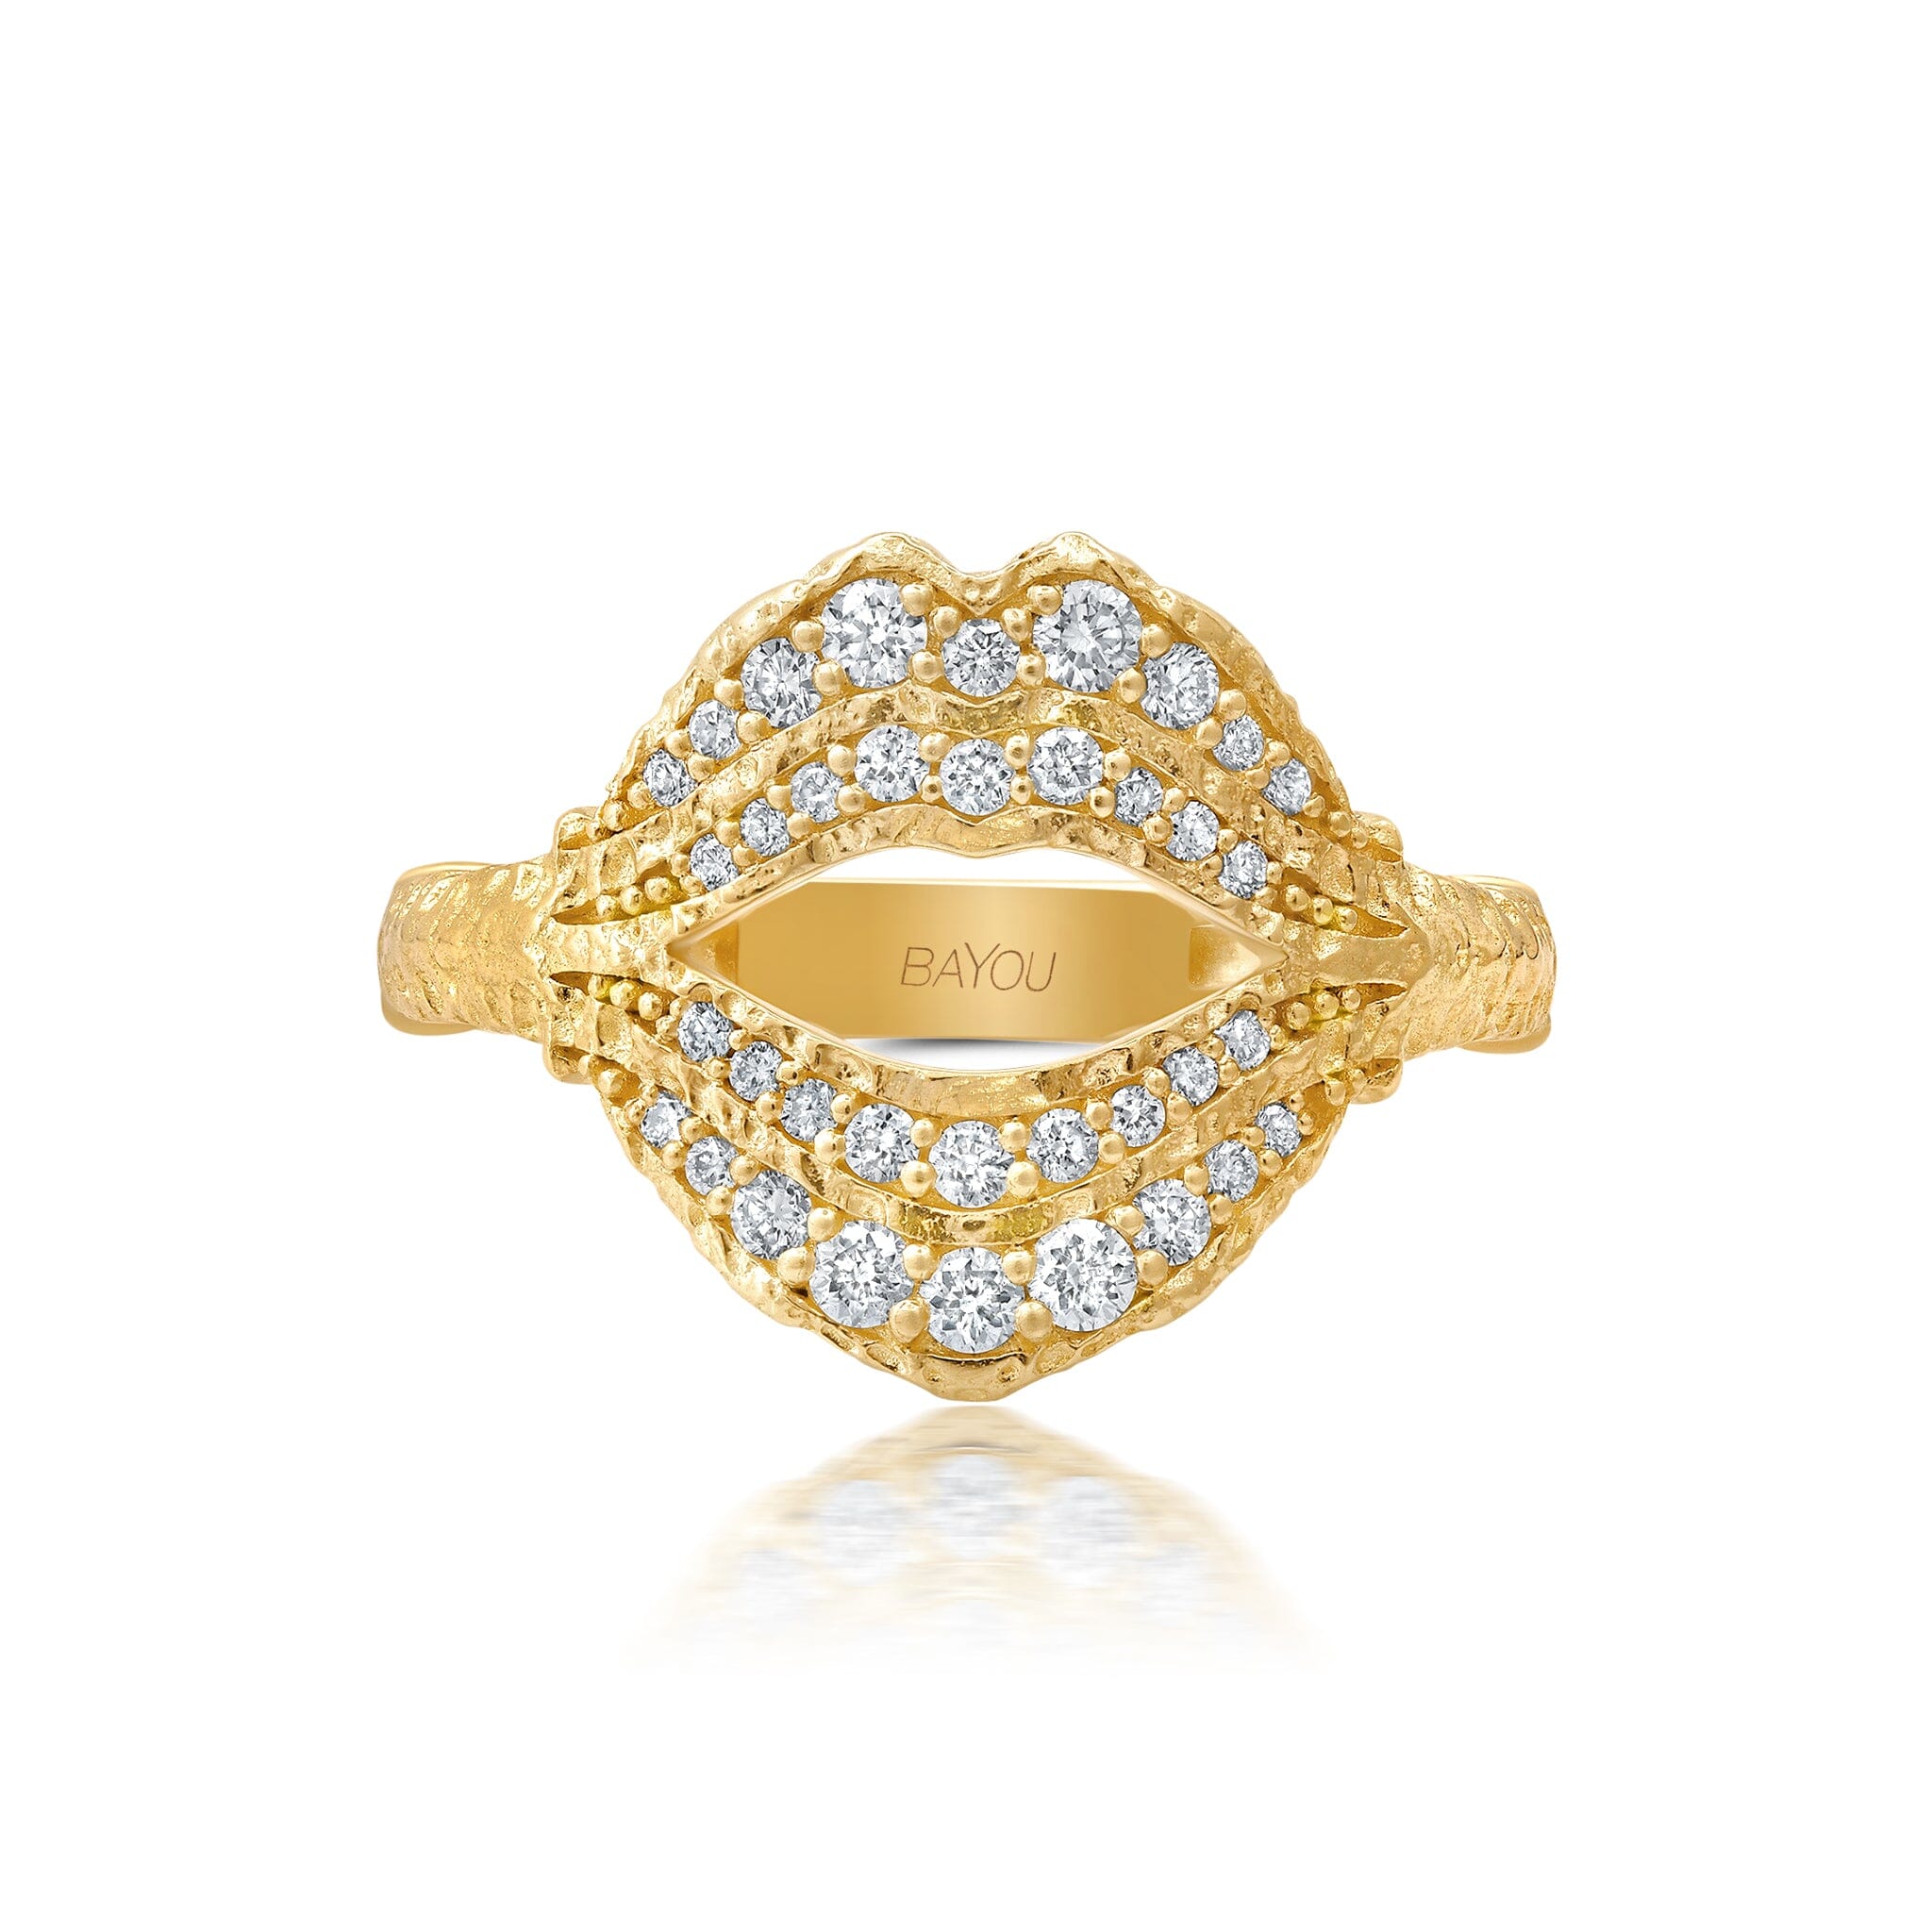 20Bayou Kiss Diamond Ring Jewelry Bayou with Love 